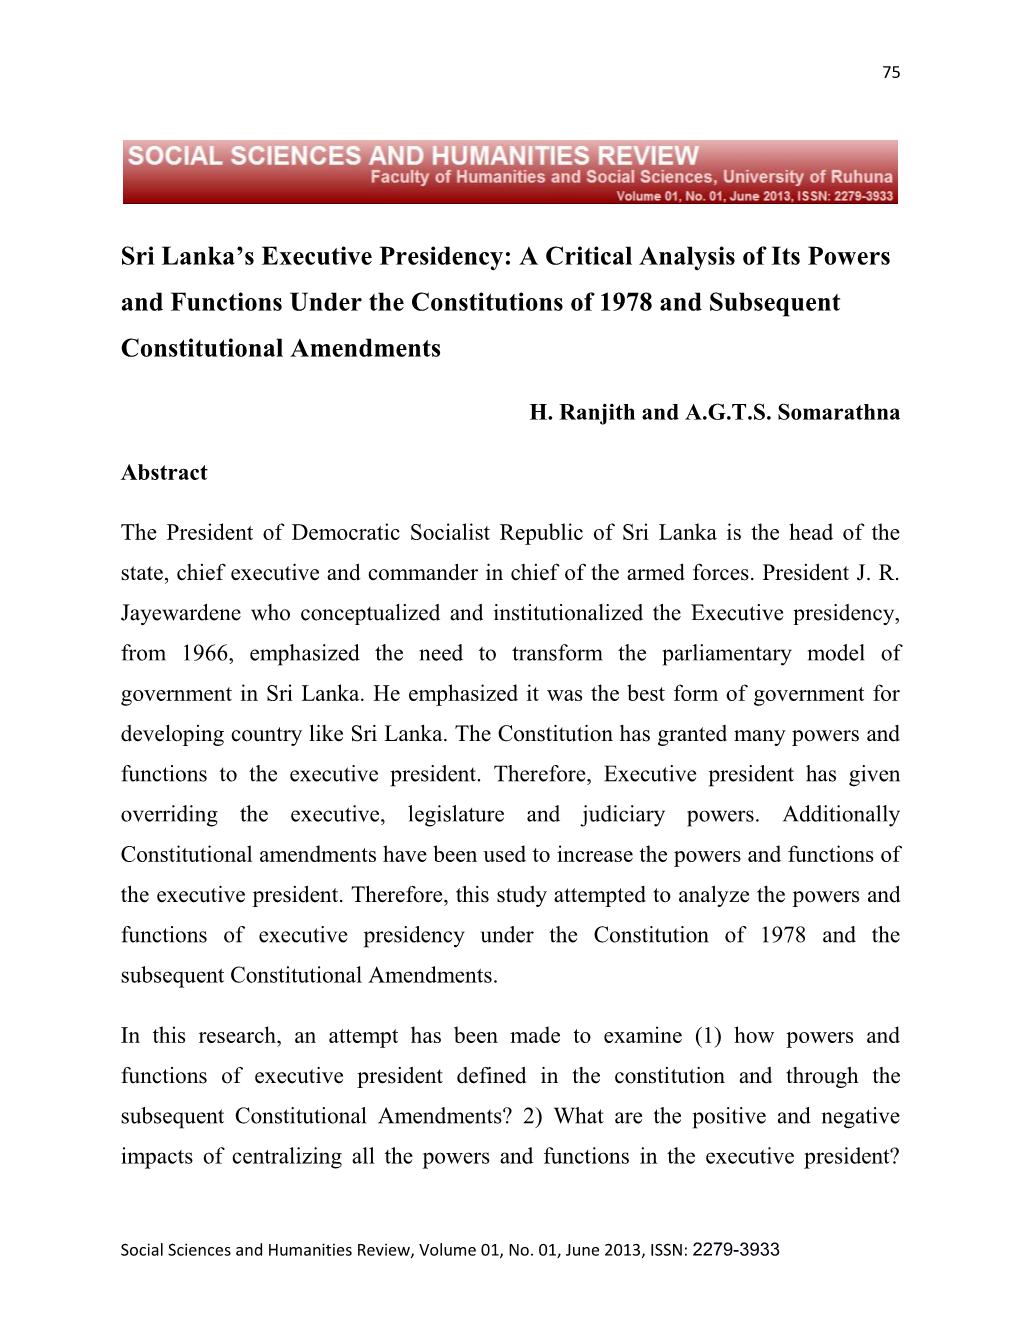 Sri Lanka's Executive Presidency: a Critical Analysis of Its Powers And